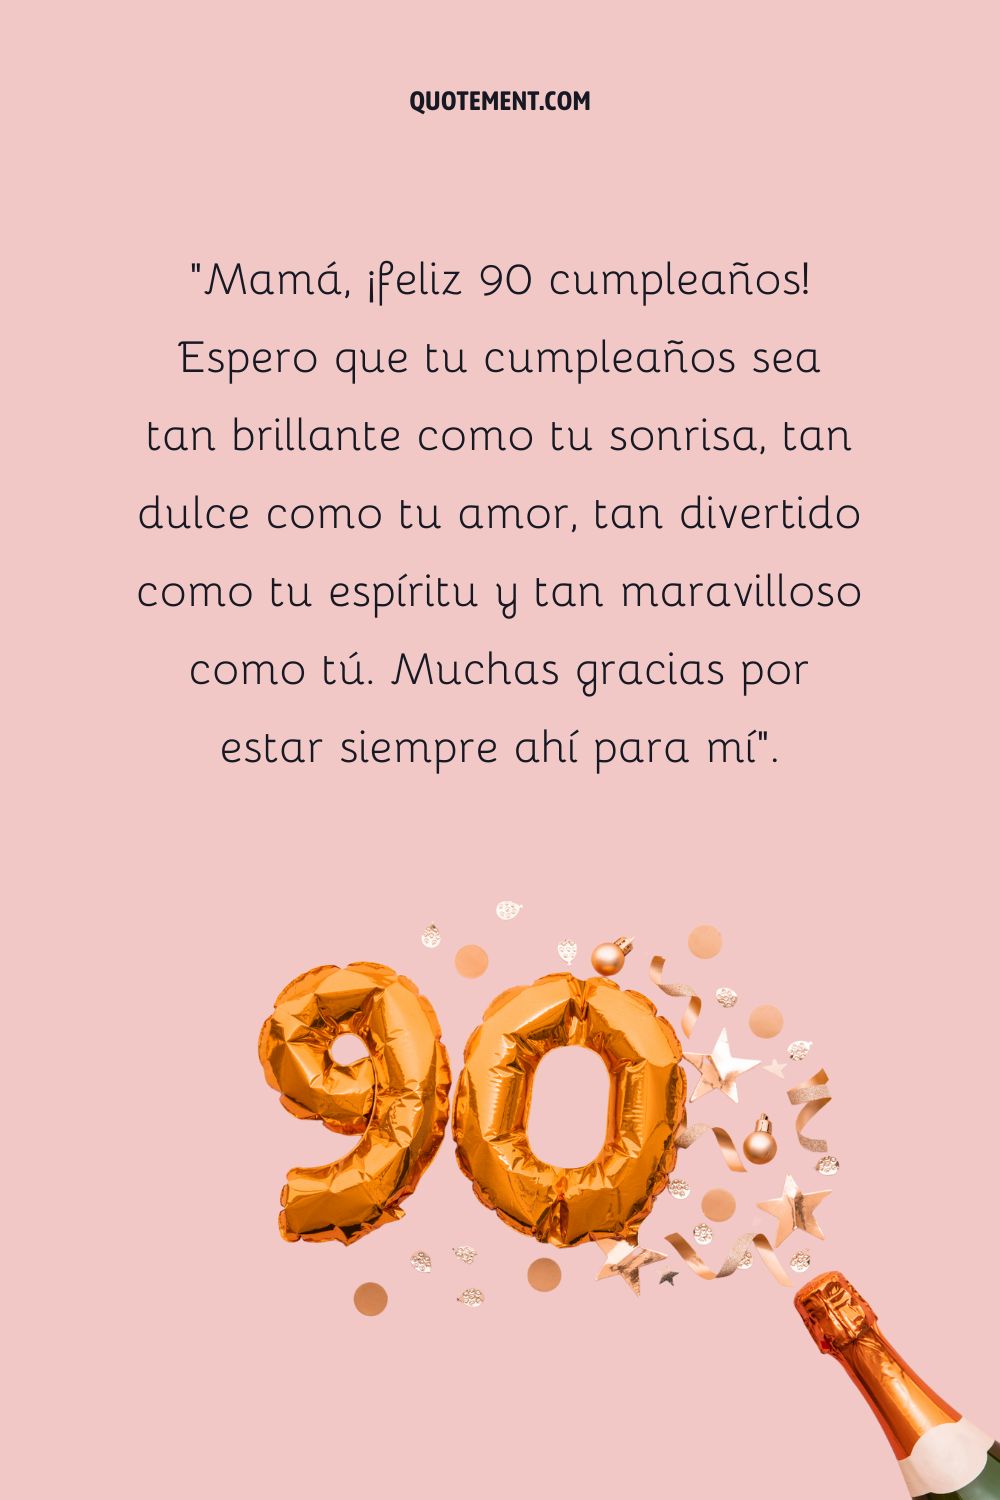 Mamá, feliz 90 cumpleaños